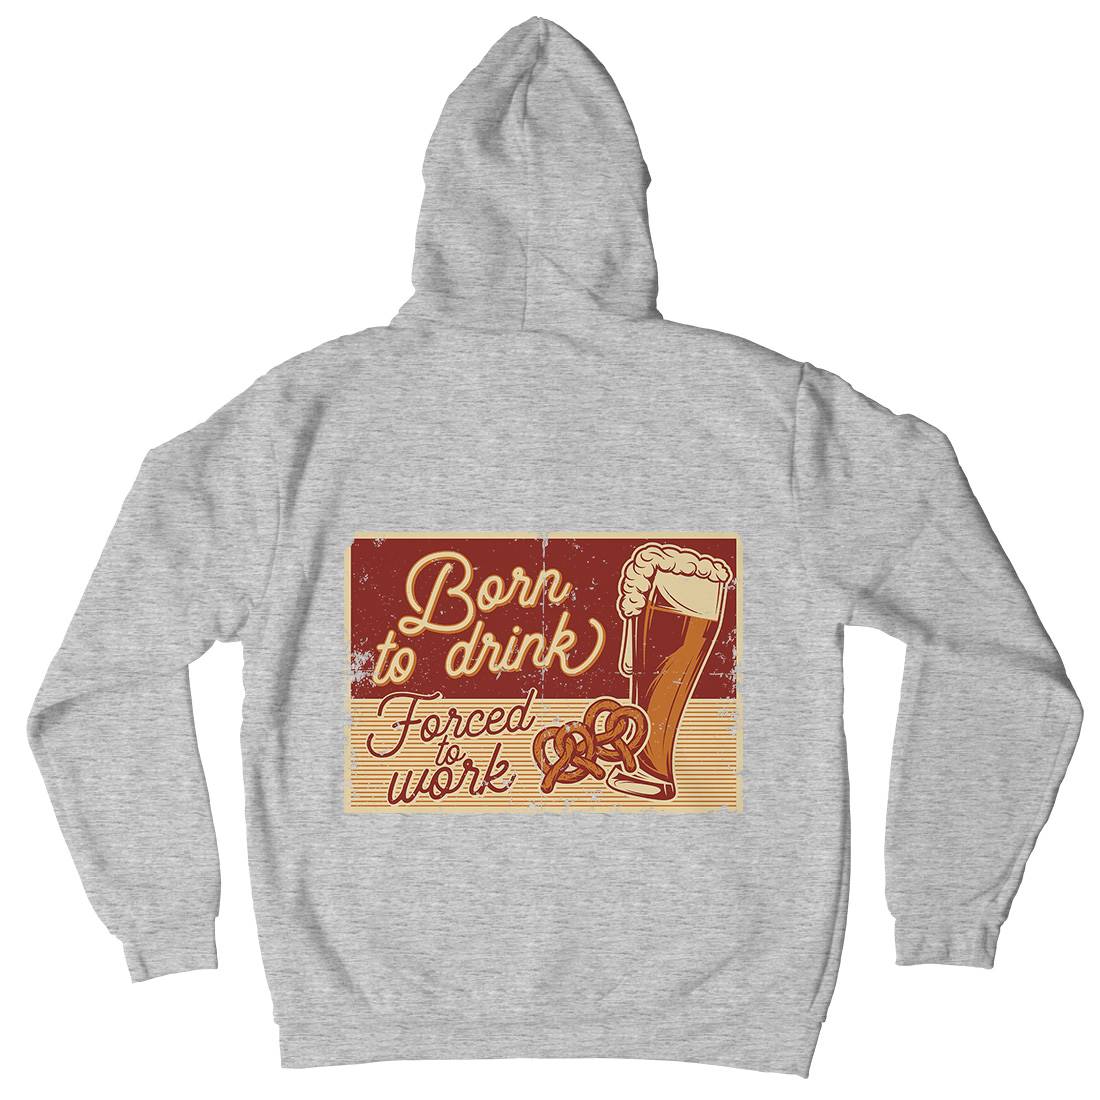 Born To Drink Beer Mens Hoodie With Pocket Drinks B282